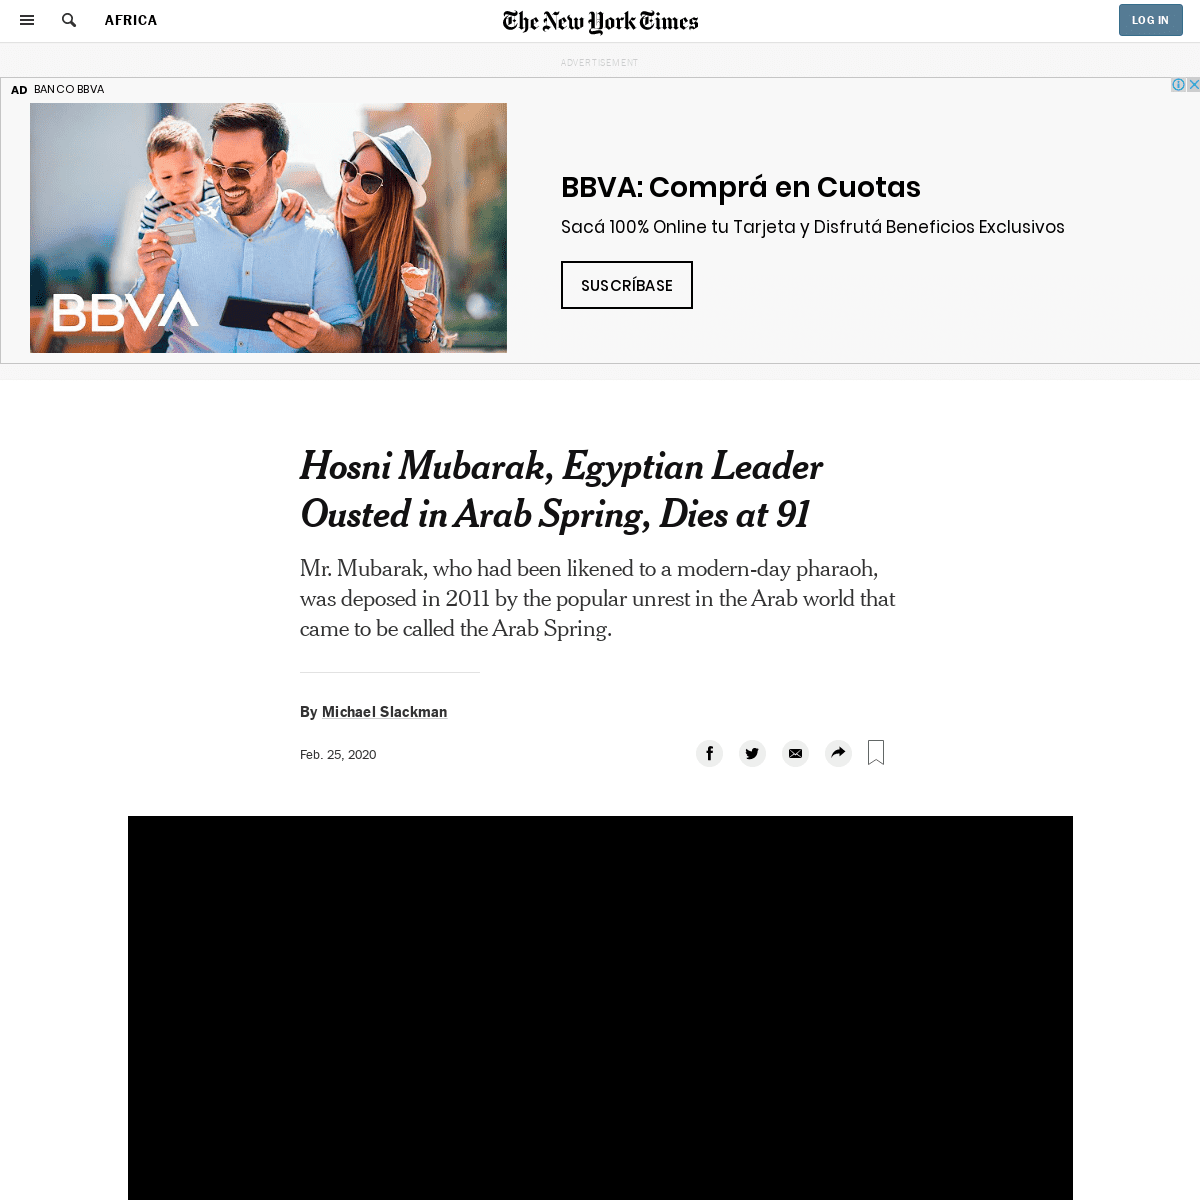 A complete backup of www.nytimes.com/2020/02/25/world/africa/hosni-mubarak-dead.html